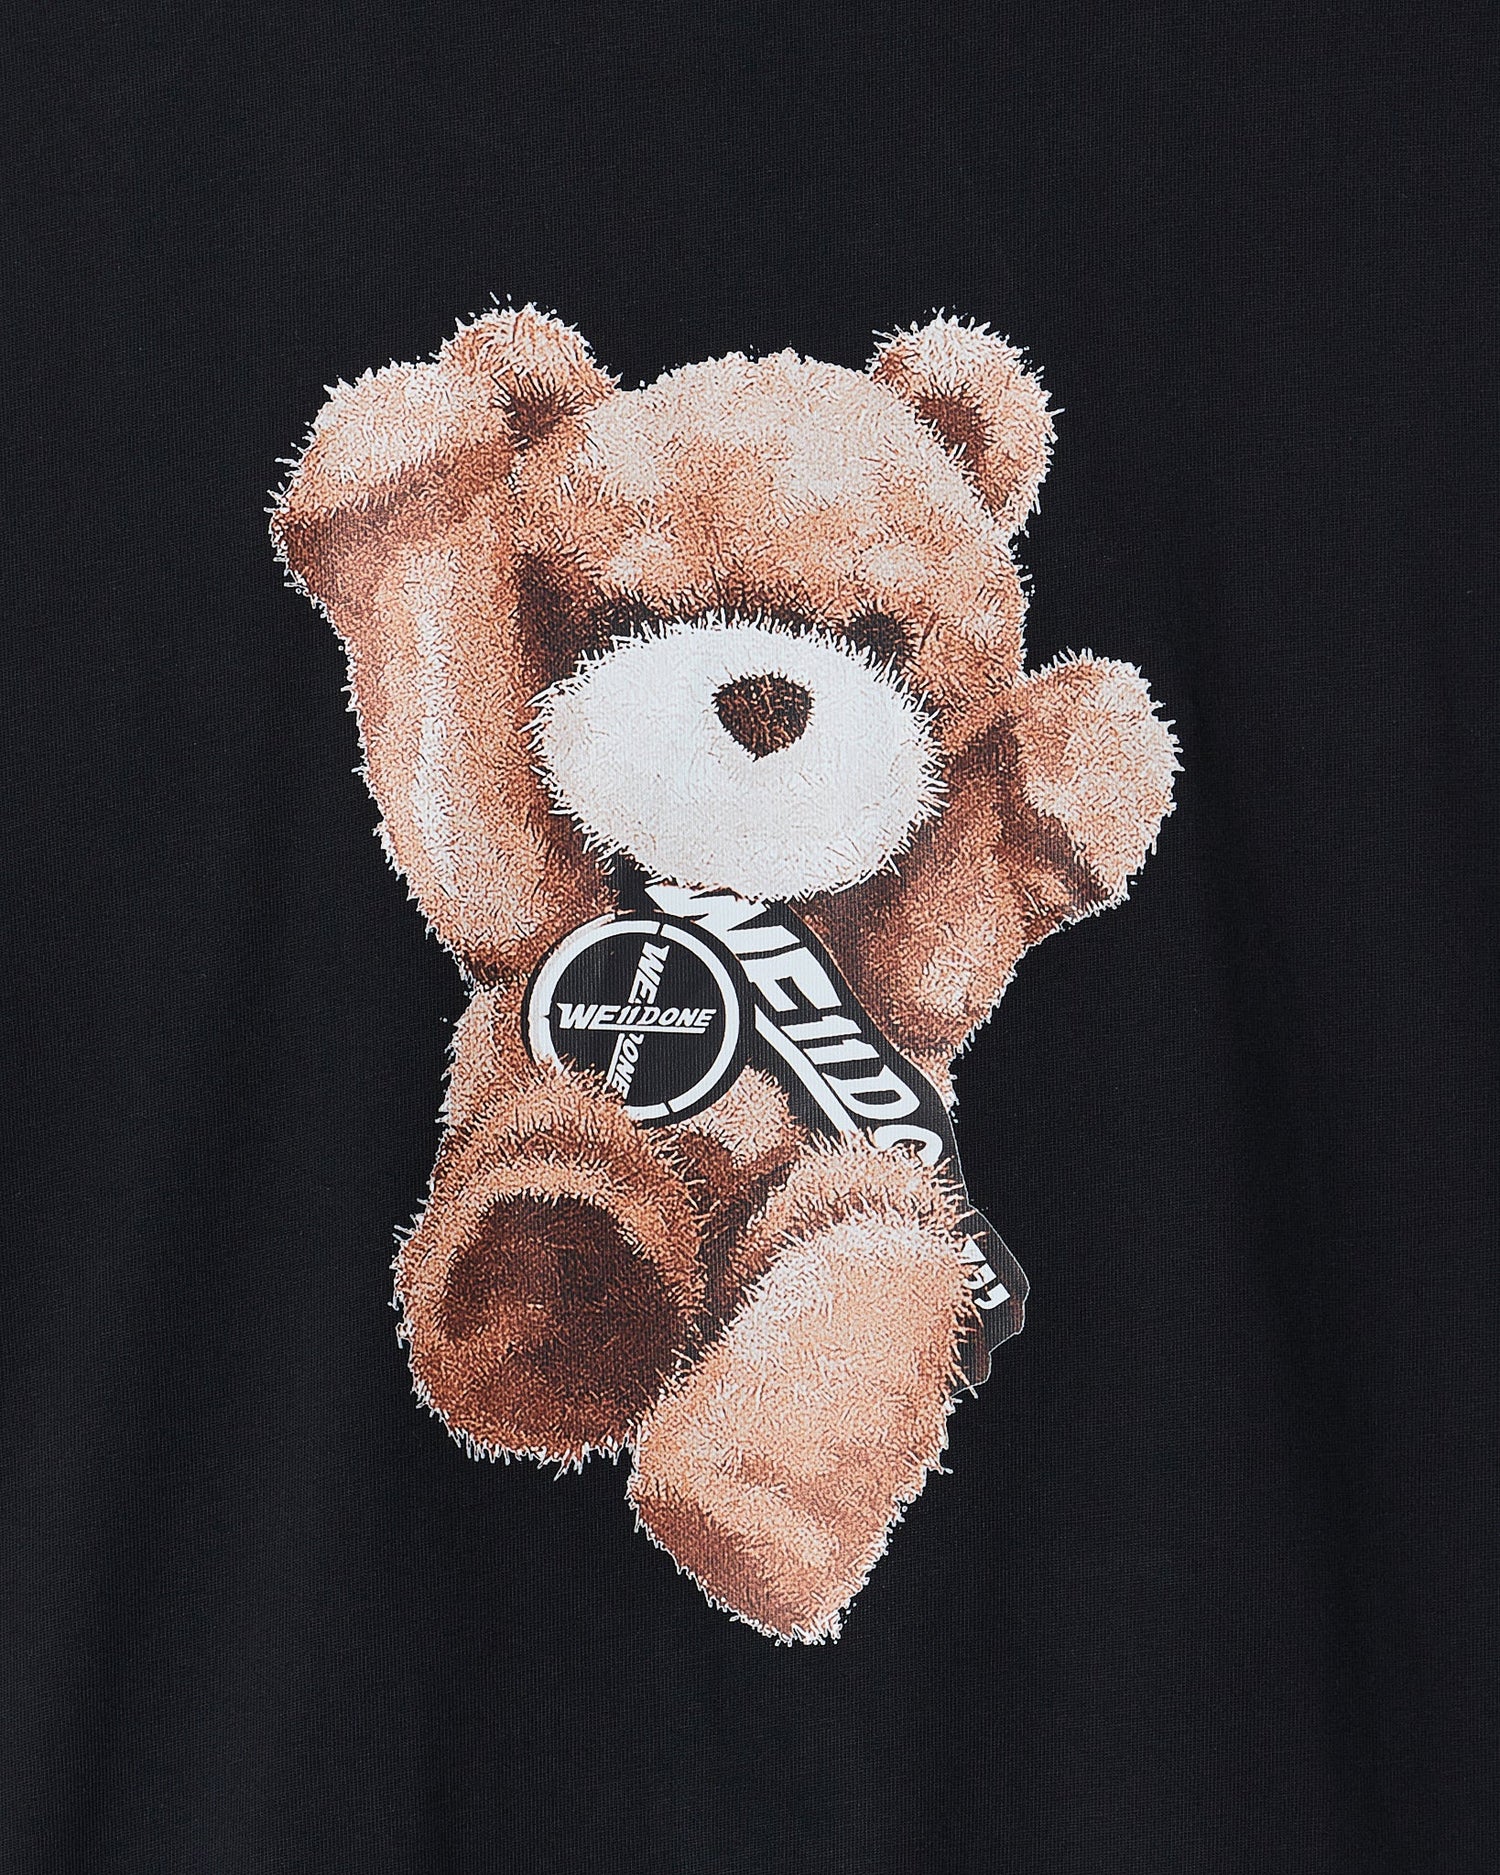 MOI OUTFIT-WE1 Teddy Bear Unisex Black T-Shirt 24.90